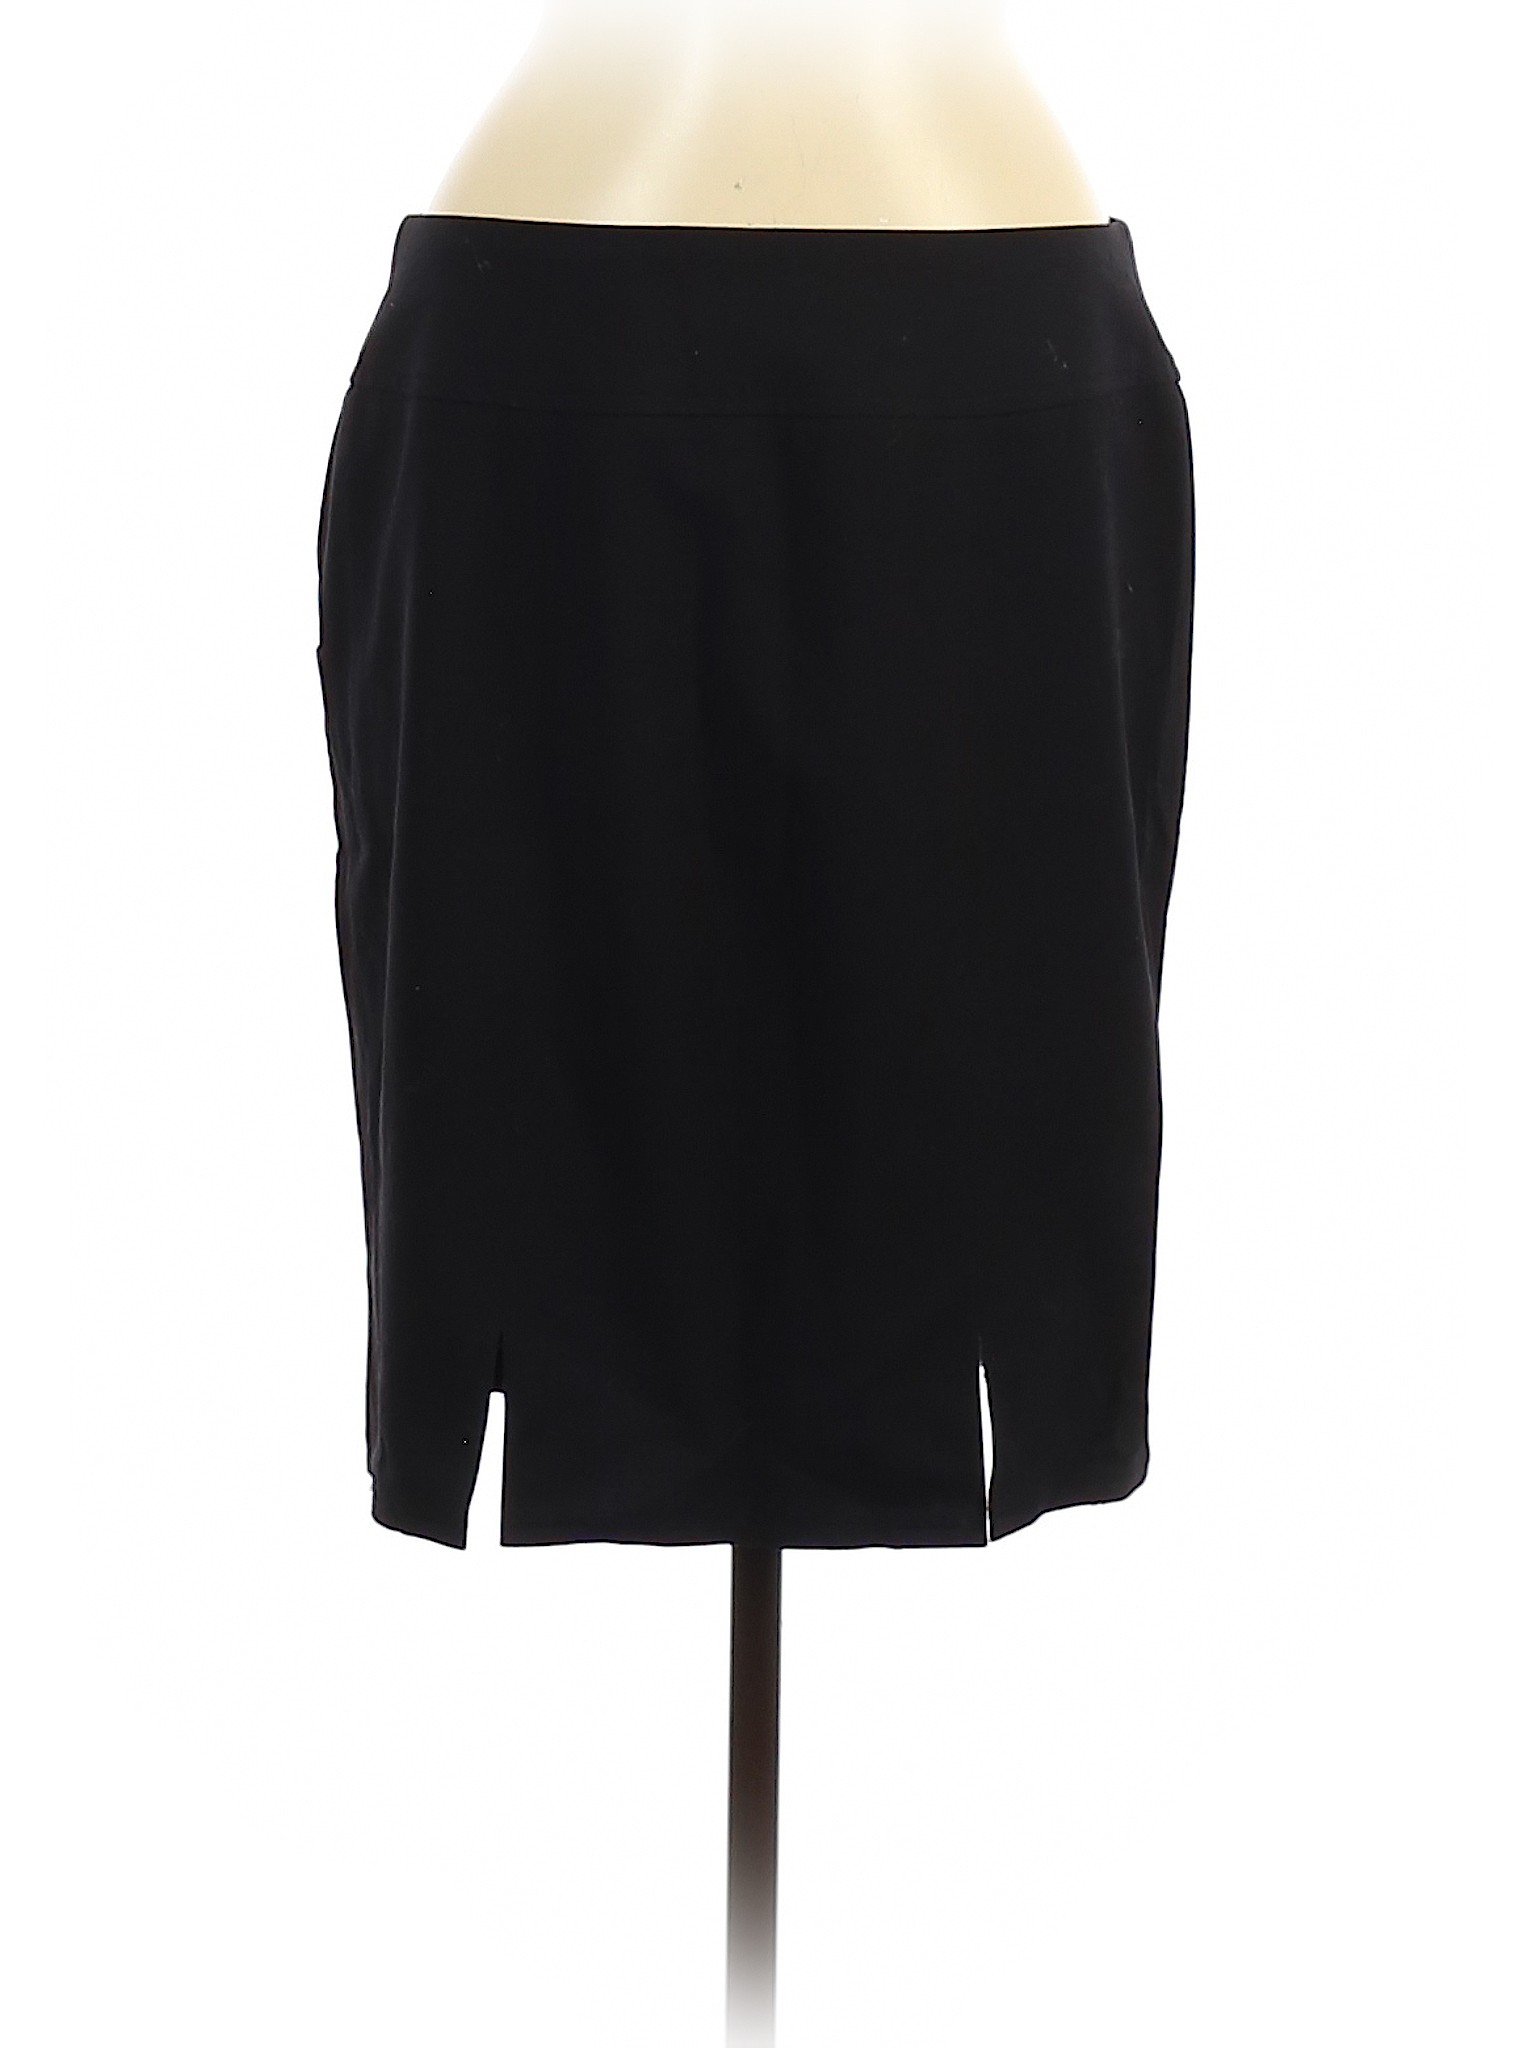 Adrienne Vittadini Women Black Casual Skirt 8 | eBay